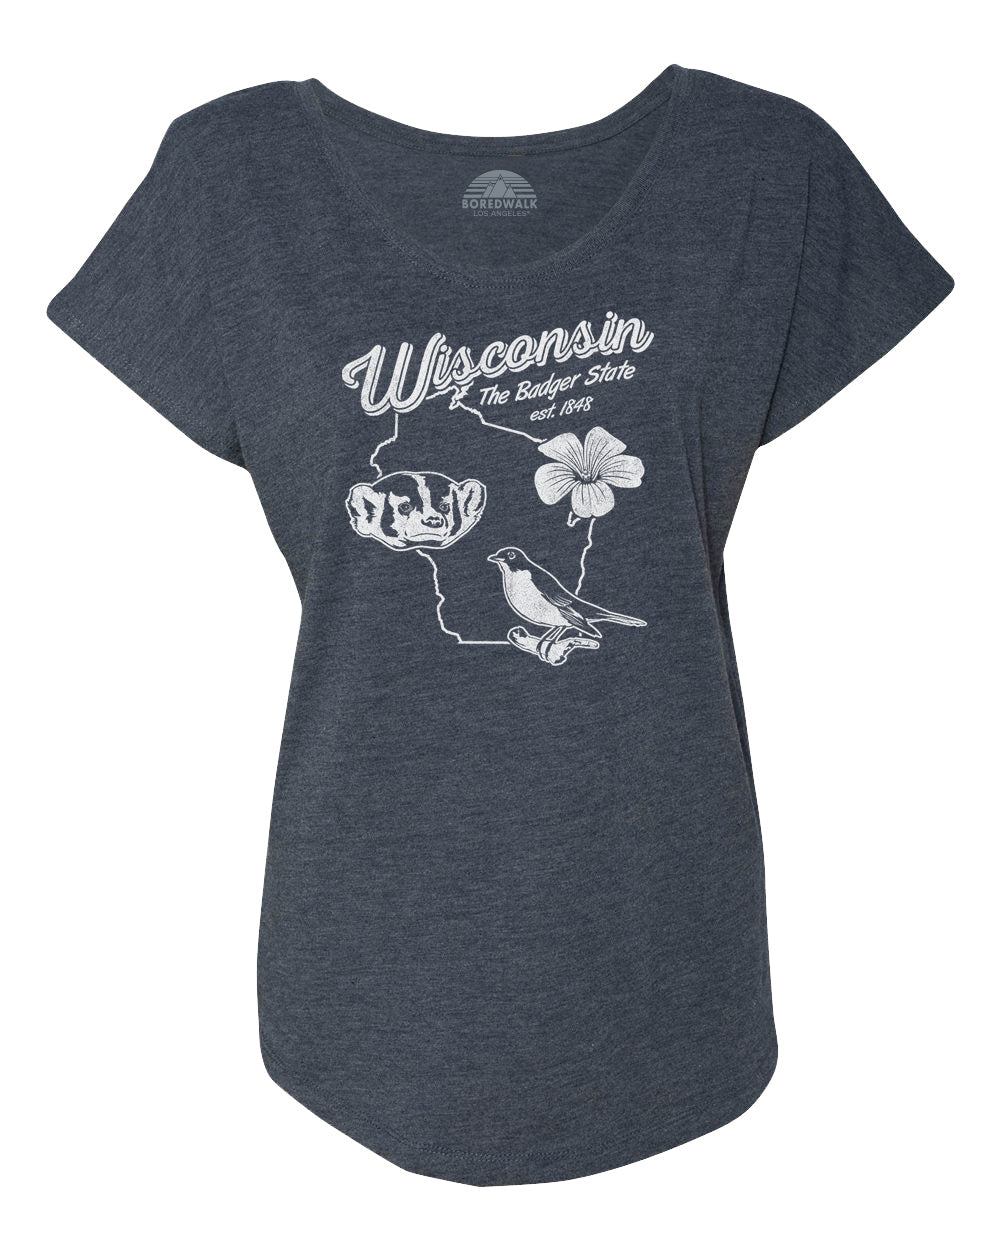 Women's Vintage Wisconsin State Scoop Neck T-Shirt